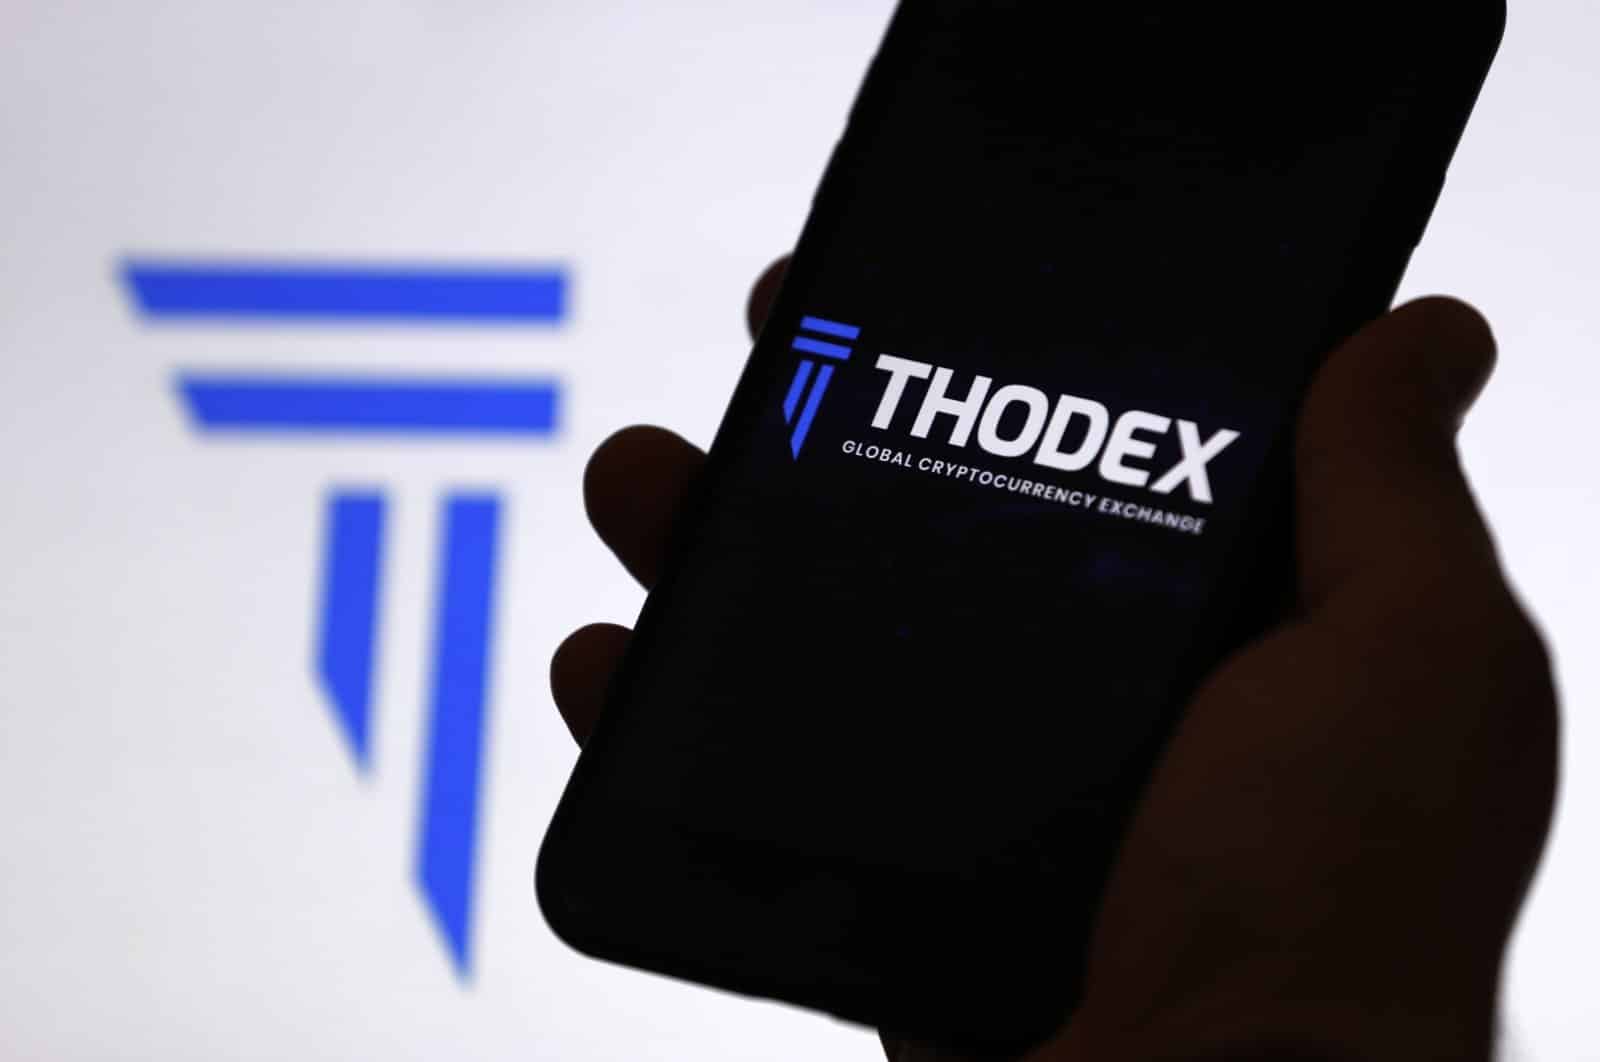 Thodex vurgunu dünya şampiyonu oldu! Thodex skandalında son durum ne?